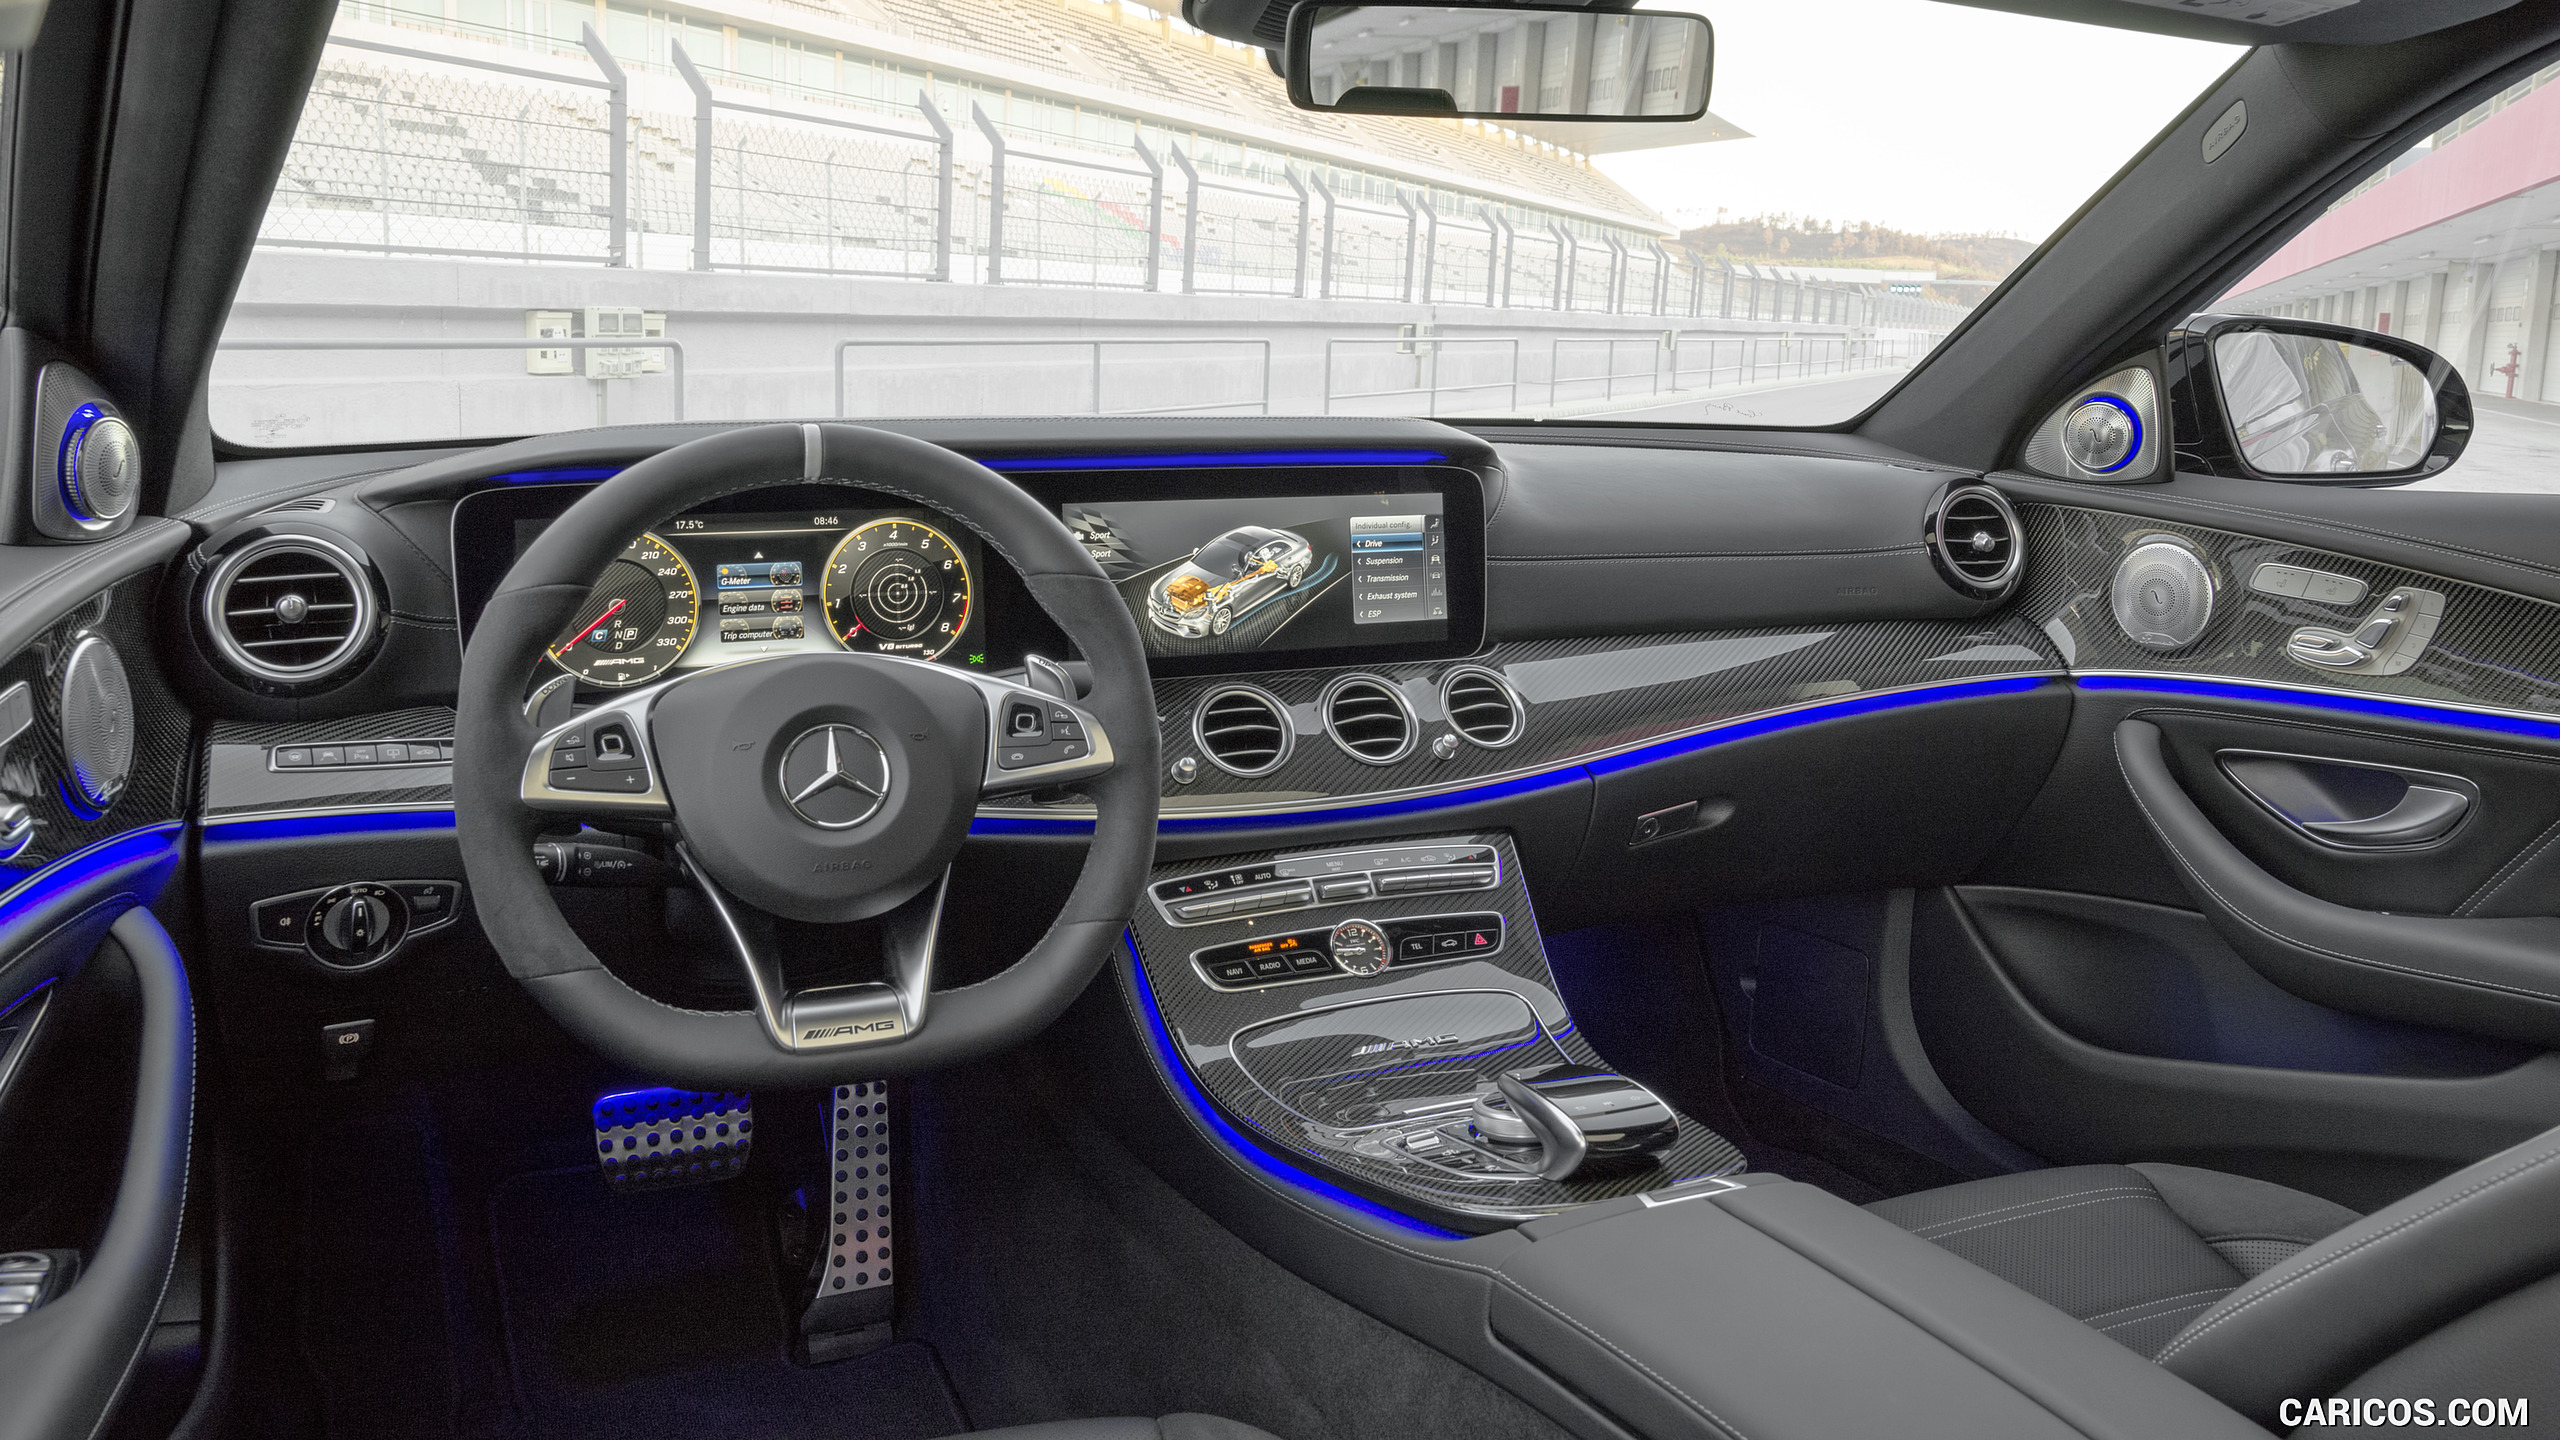 2018 Mercedes-AMG E63 S 4MATIC+ - Interior, Cockpit, #33 of 323